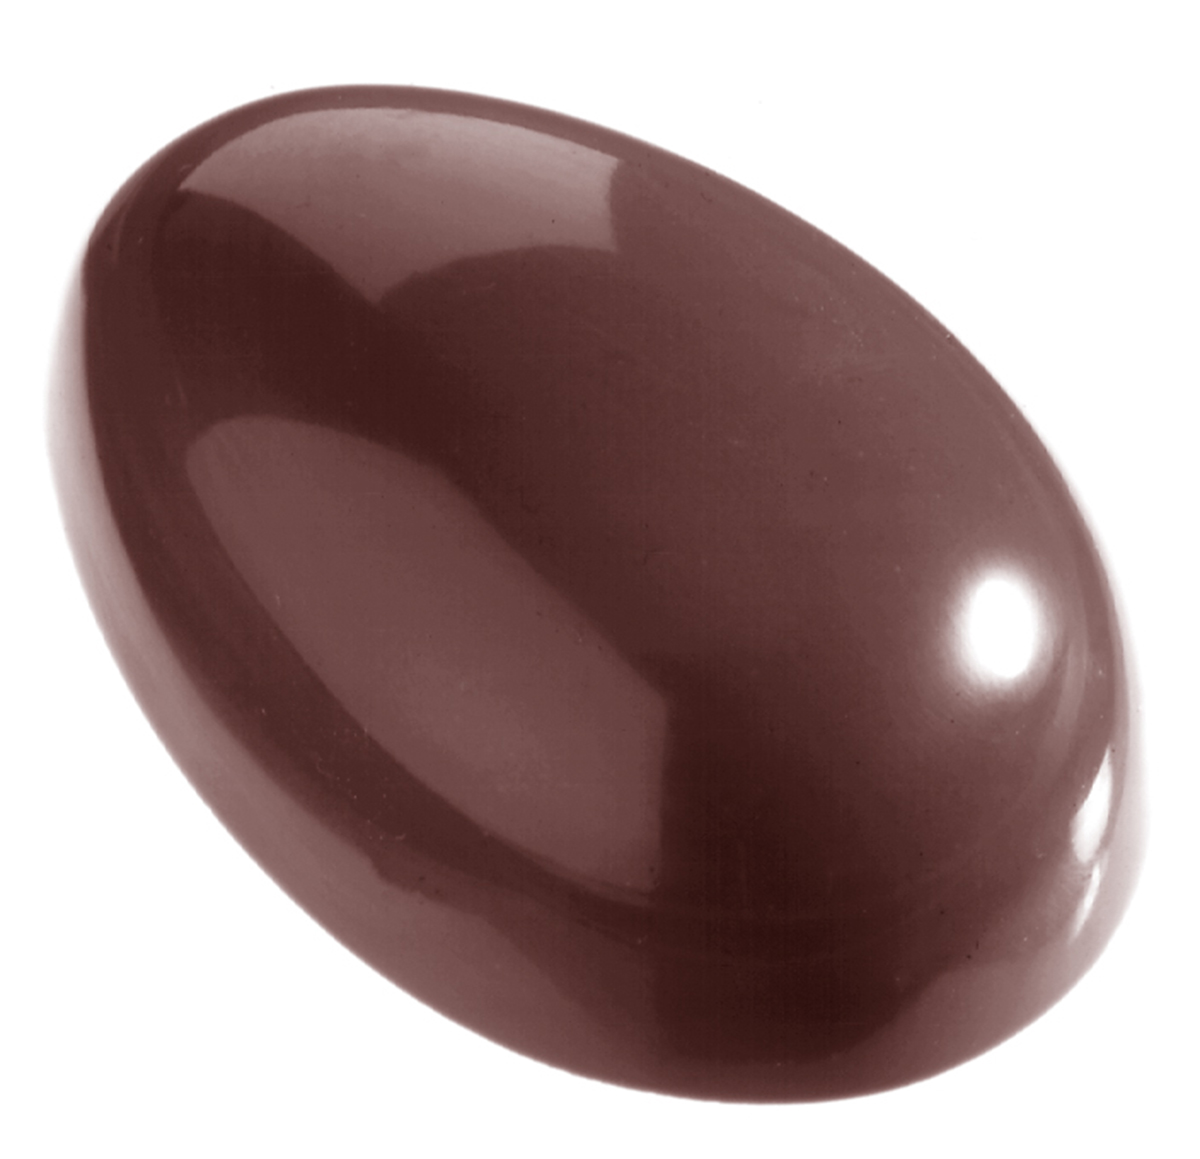 Professionel chokoladeform i polycarbonat - Stort Glat Påskeæg Chokoladeform CW1255